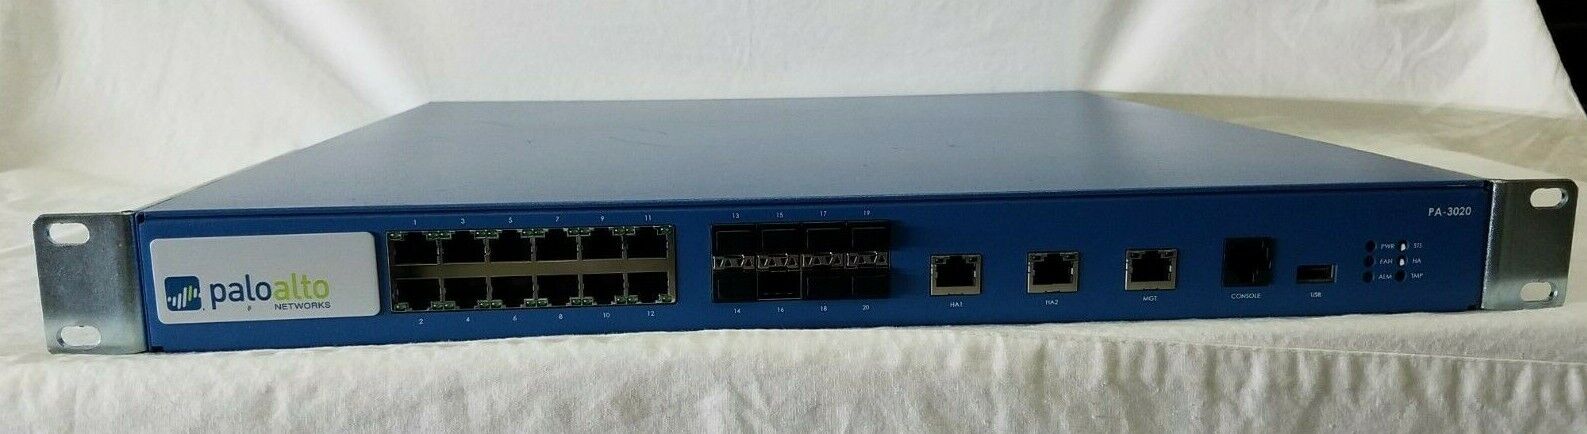 Palo Alto PA-3020 Network Security Appliance - Blue *No Accessories* 